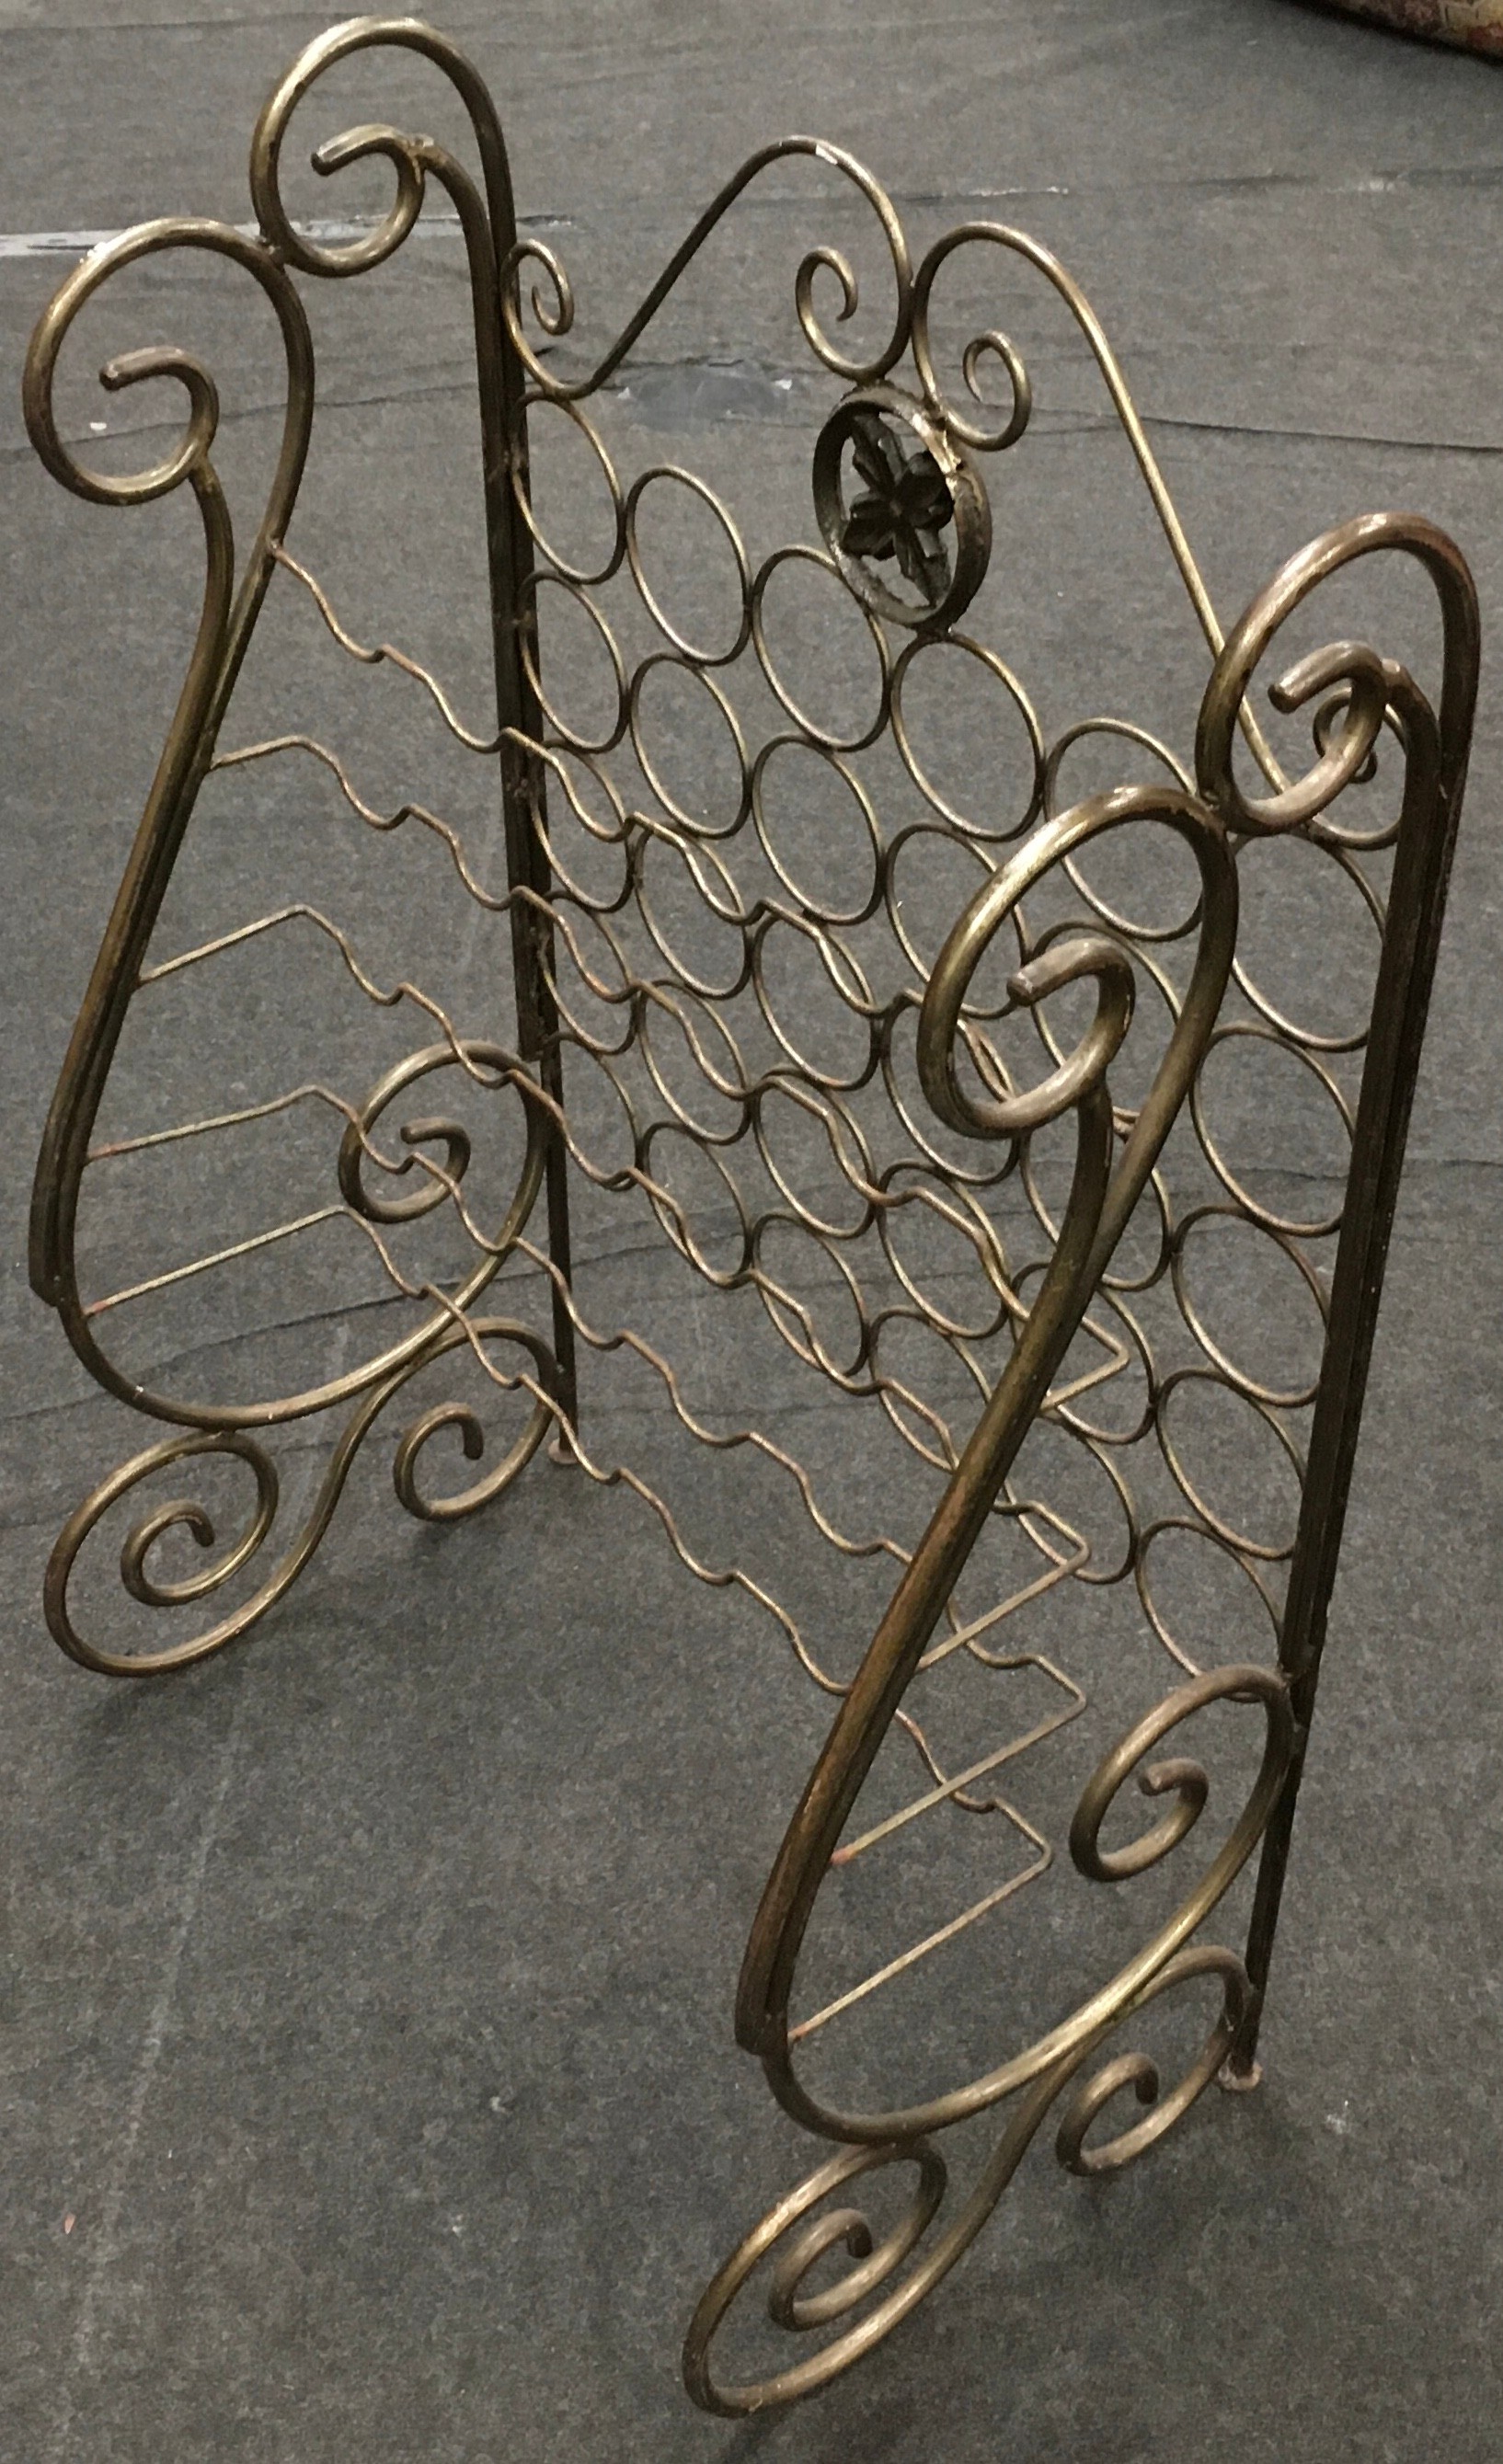 large ornate cast metal wine rack for holding up to 30 bottles - Image 2 of 3